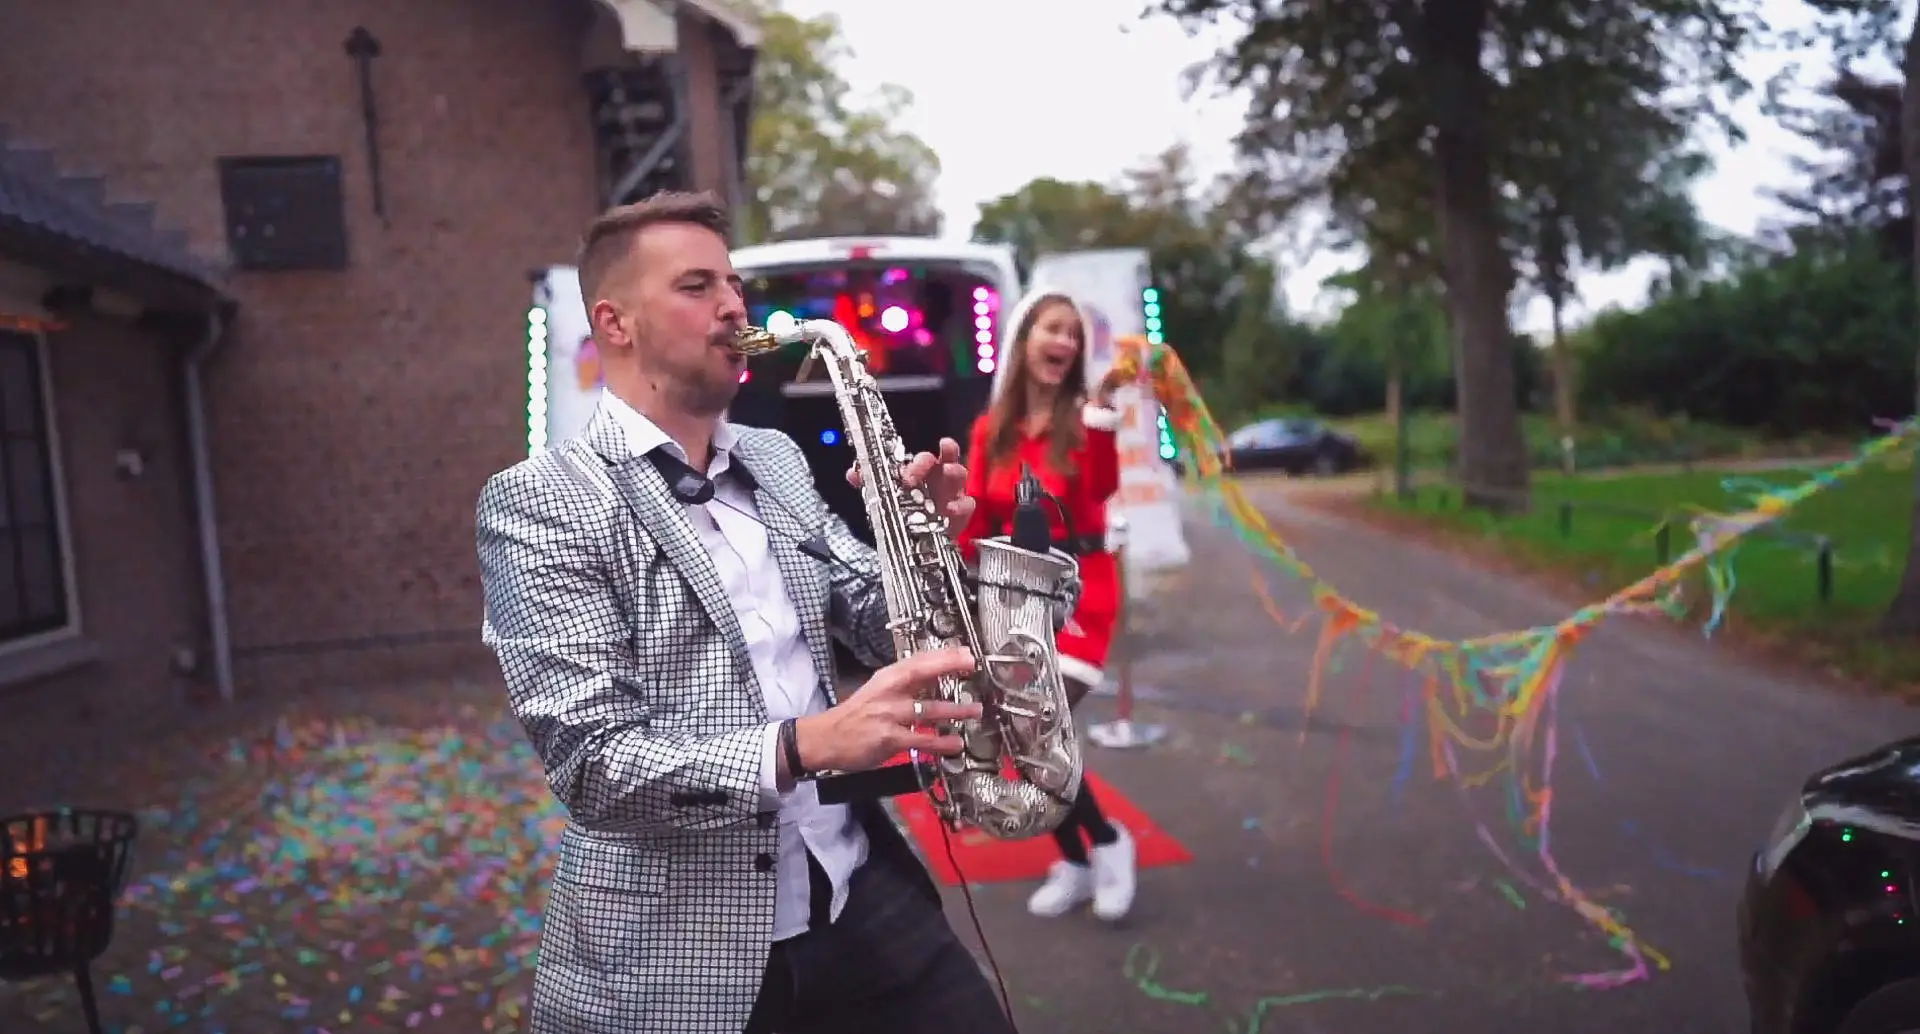 kerst DJ saxofonist op straat